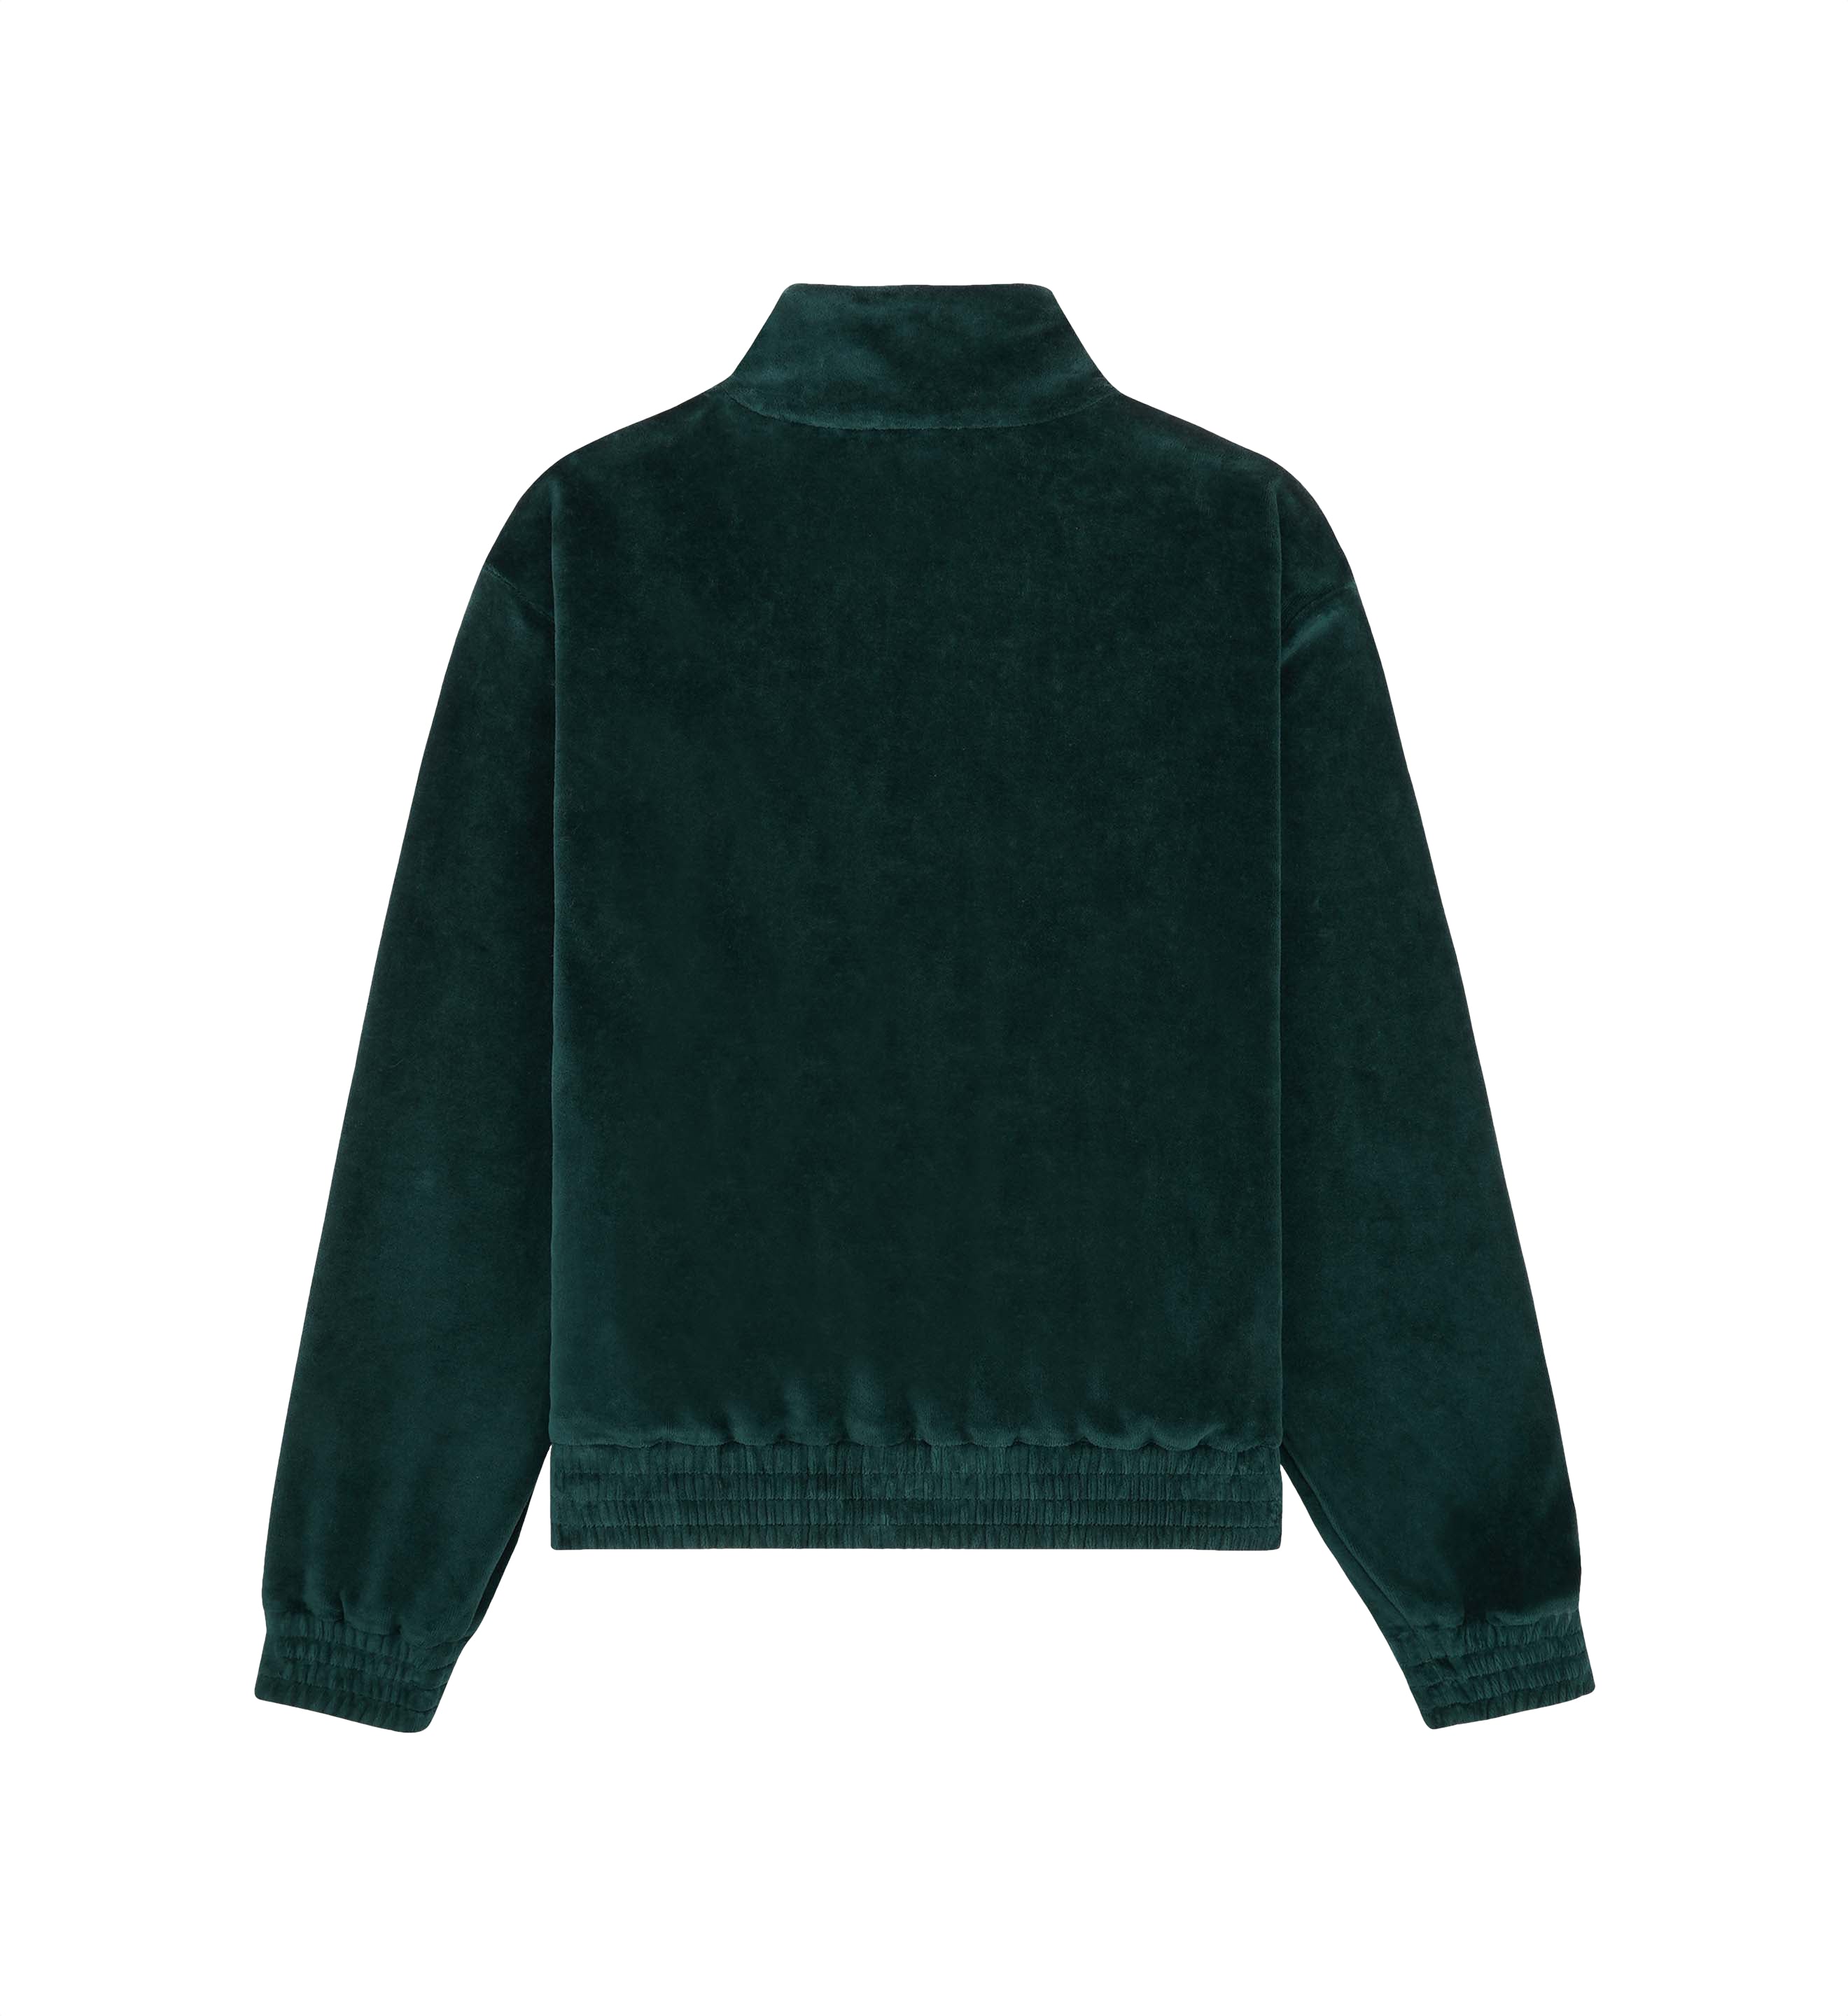 Oetker Collection Boutique Sporty & Rich x Le Bristol Green Velour Jacket